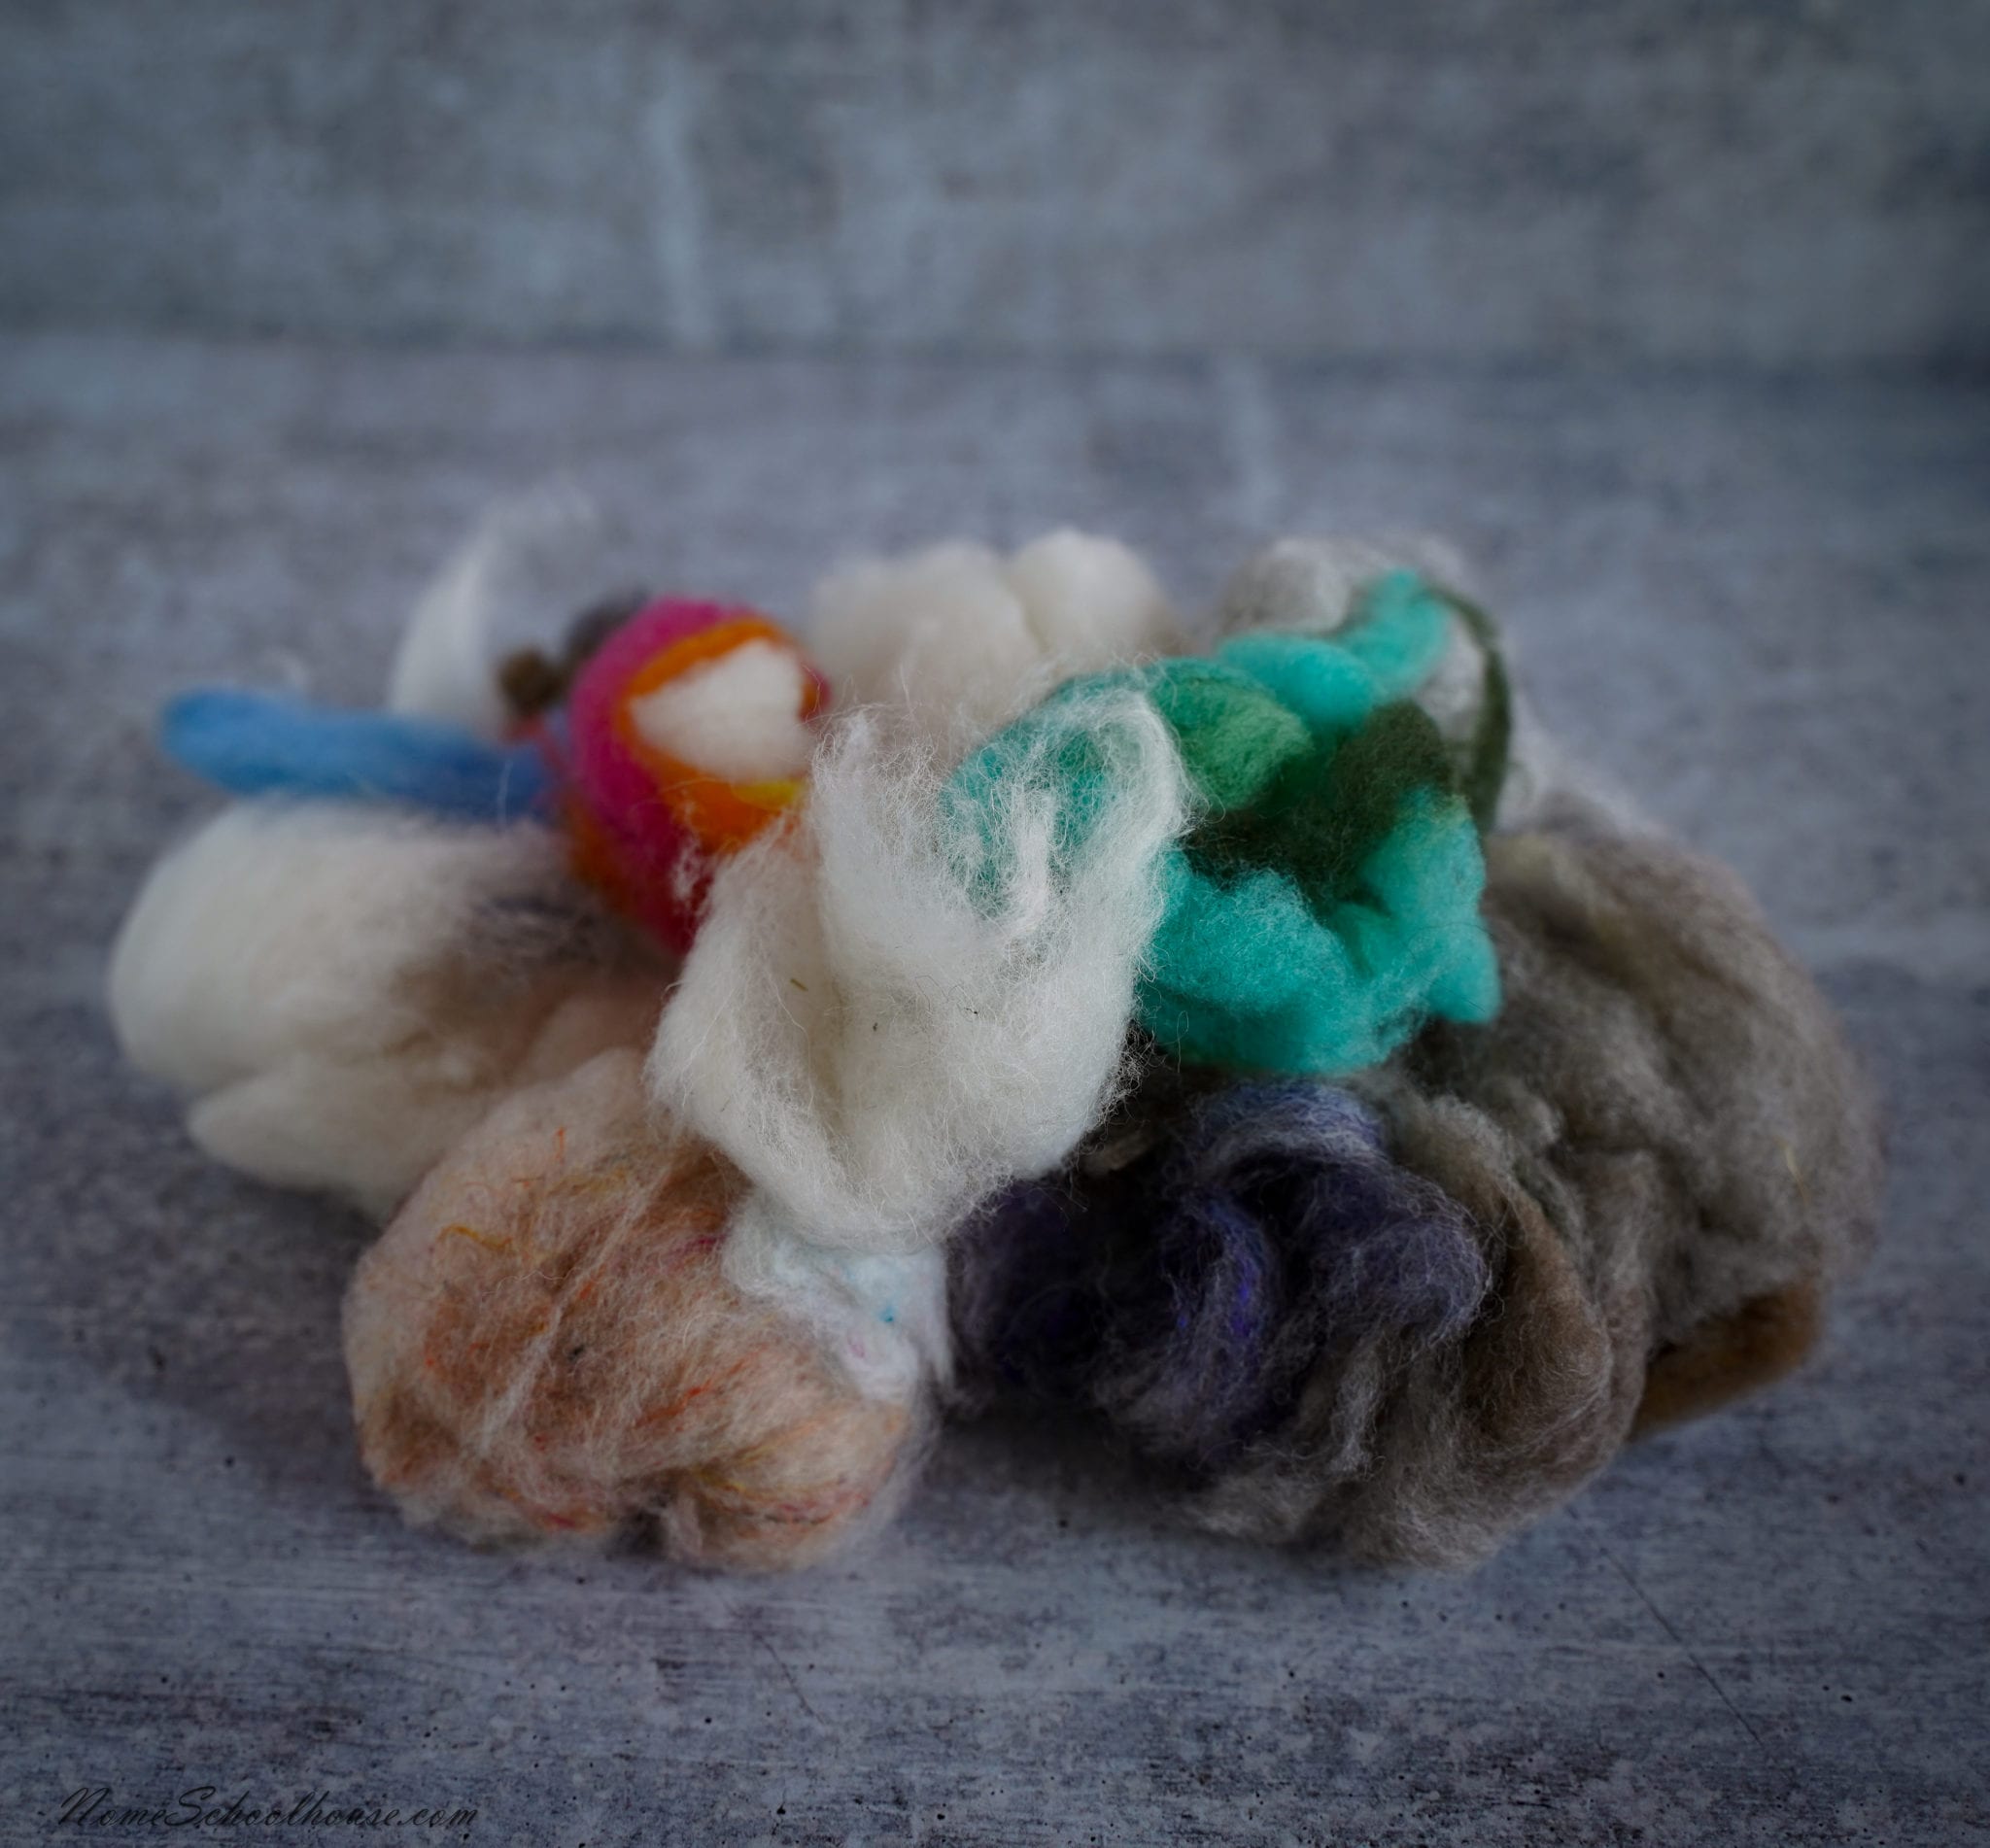 1 Roll of Wool Roving Yarn Wool Roving for Needle Felting Wool Felting  Supplies 